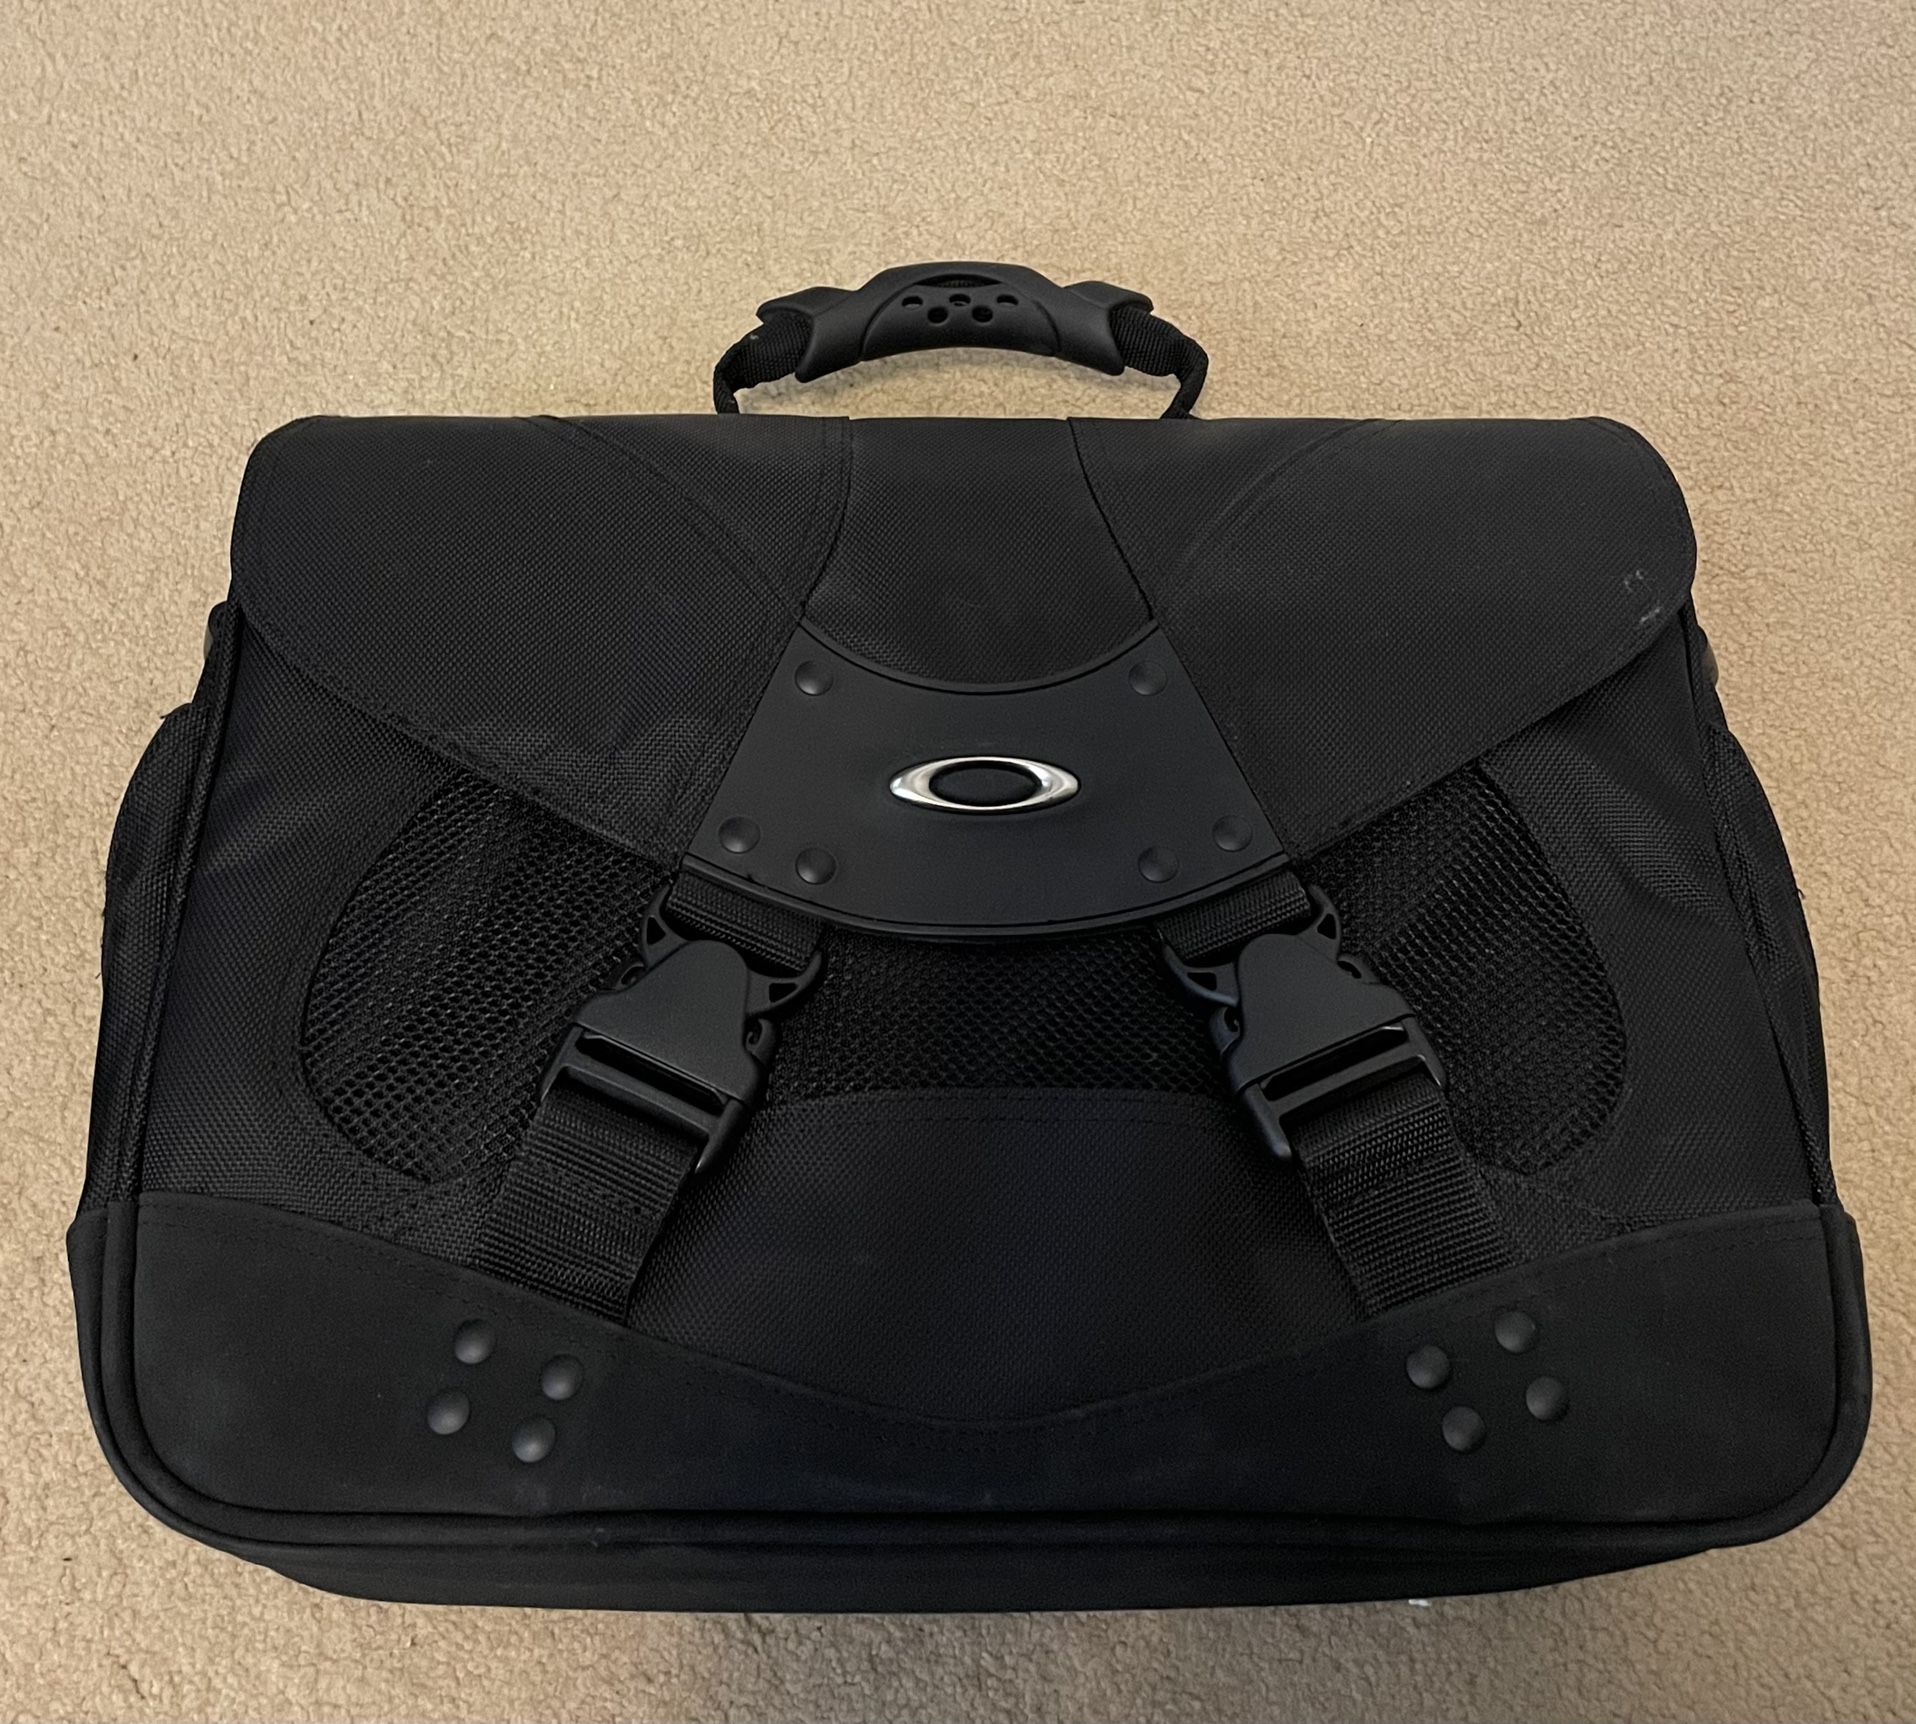 Genuine Oakley computer bag for Sale in Chula Vista, CA - OfferUp